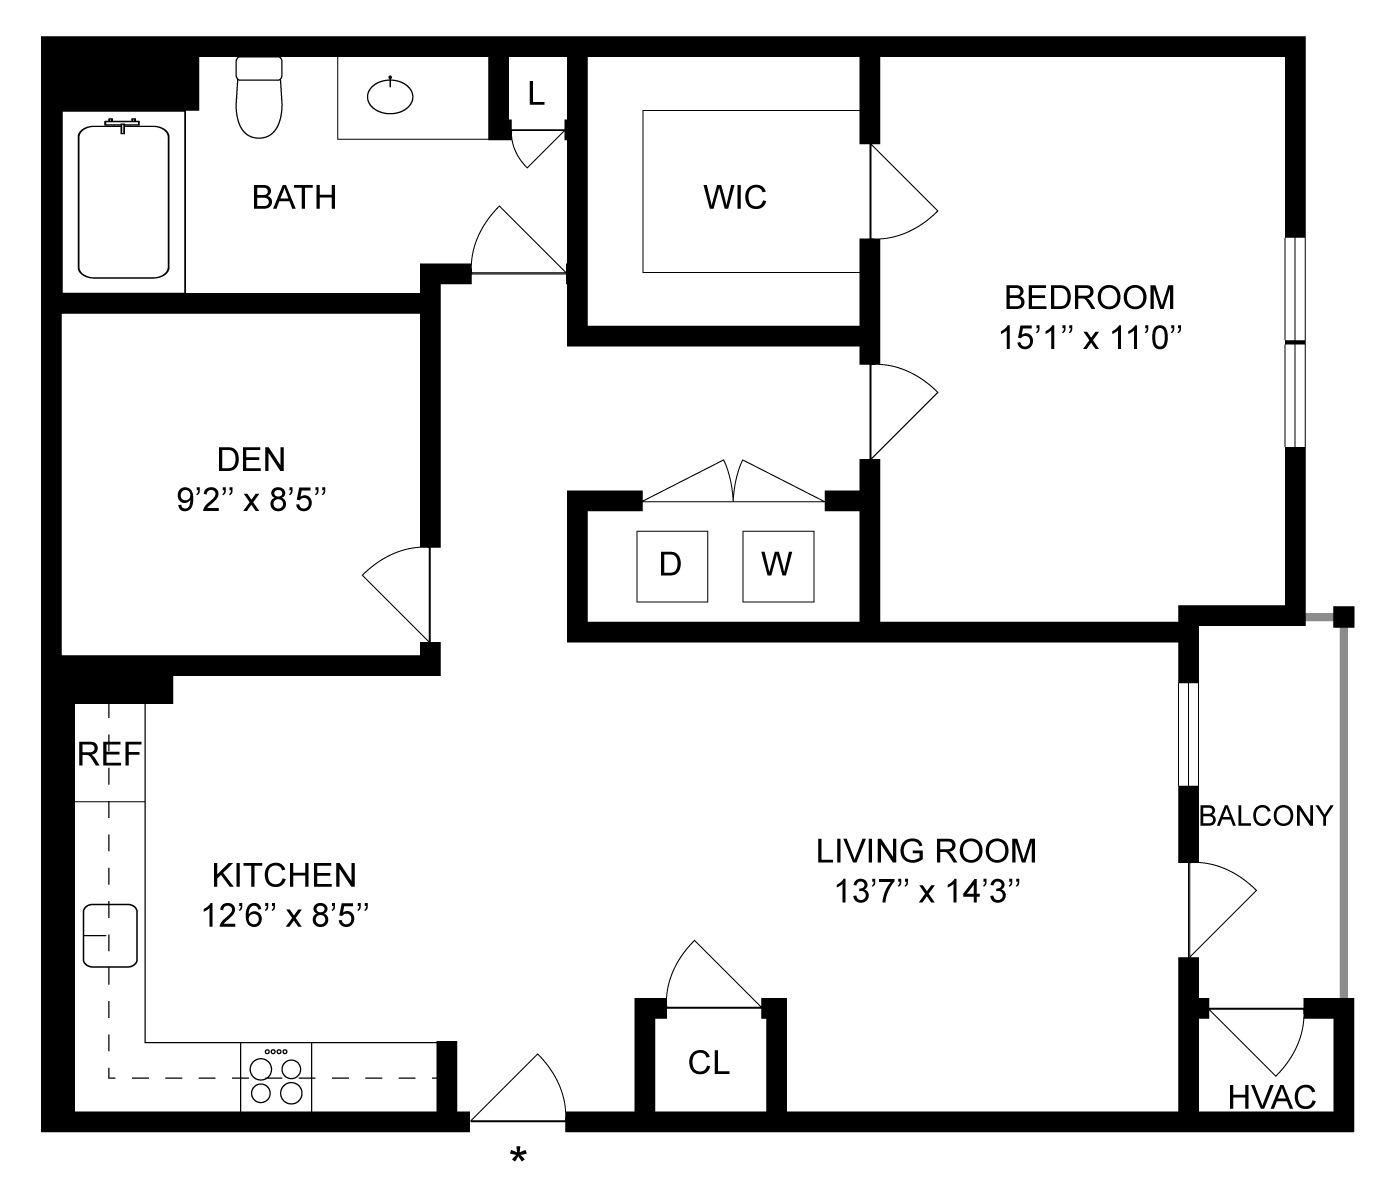 Floorplan for Apartment #01-A22, 3 bedroom unit at Halstead Hopkinton